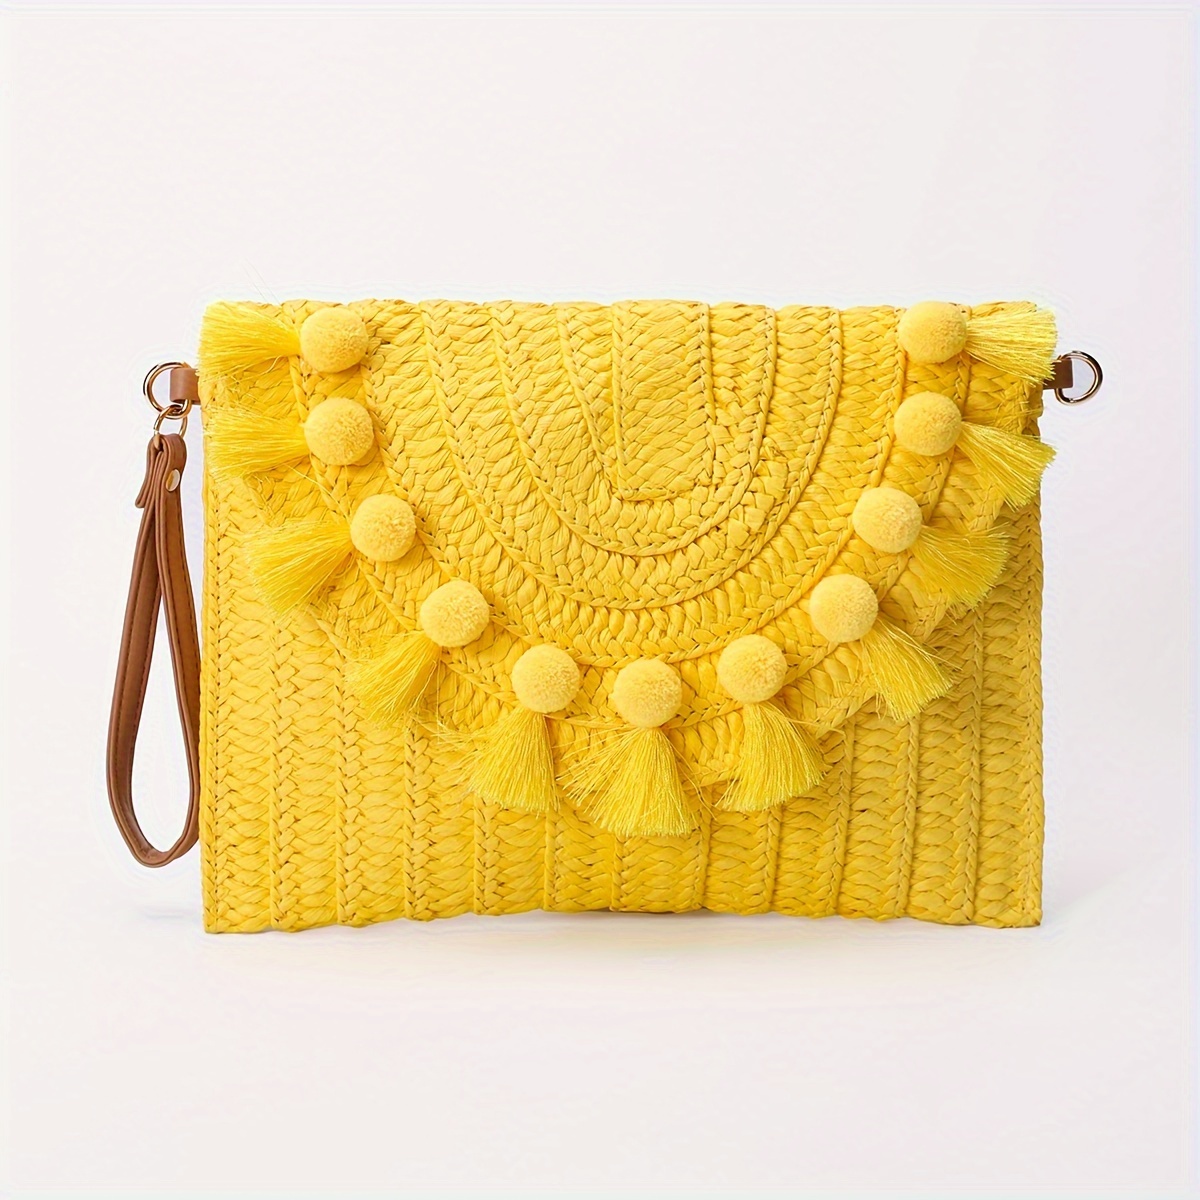 Oct17 Women Straw Beach Bag Tote Shoulder Bag Summer Handbag - Yellow